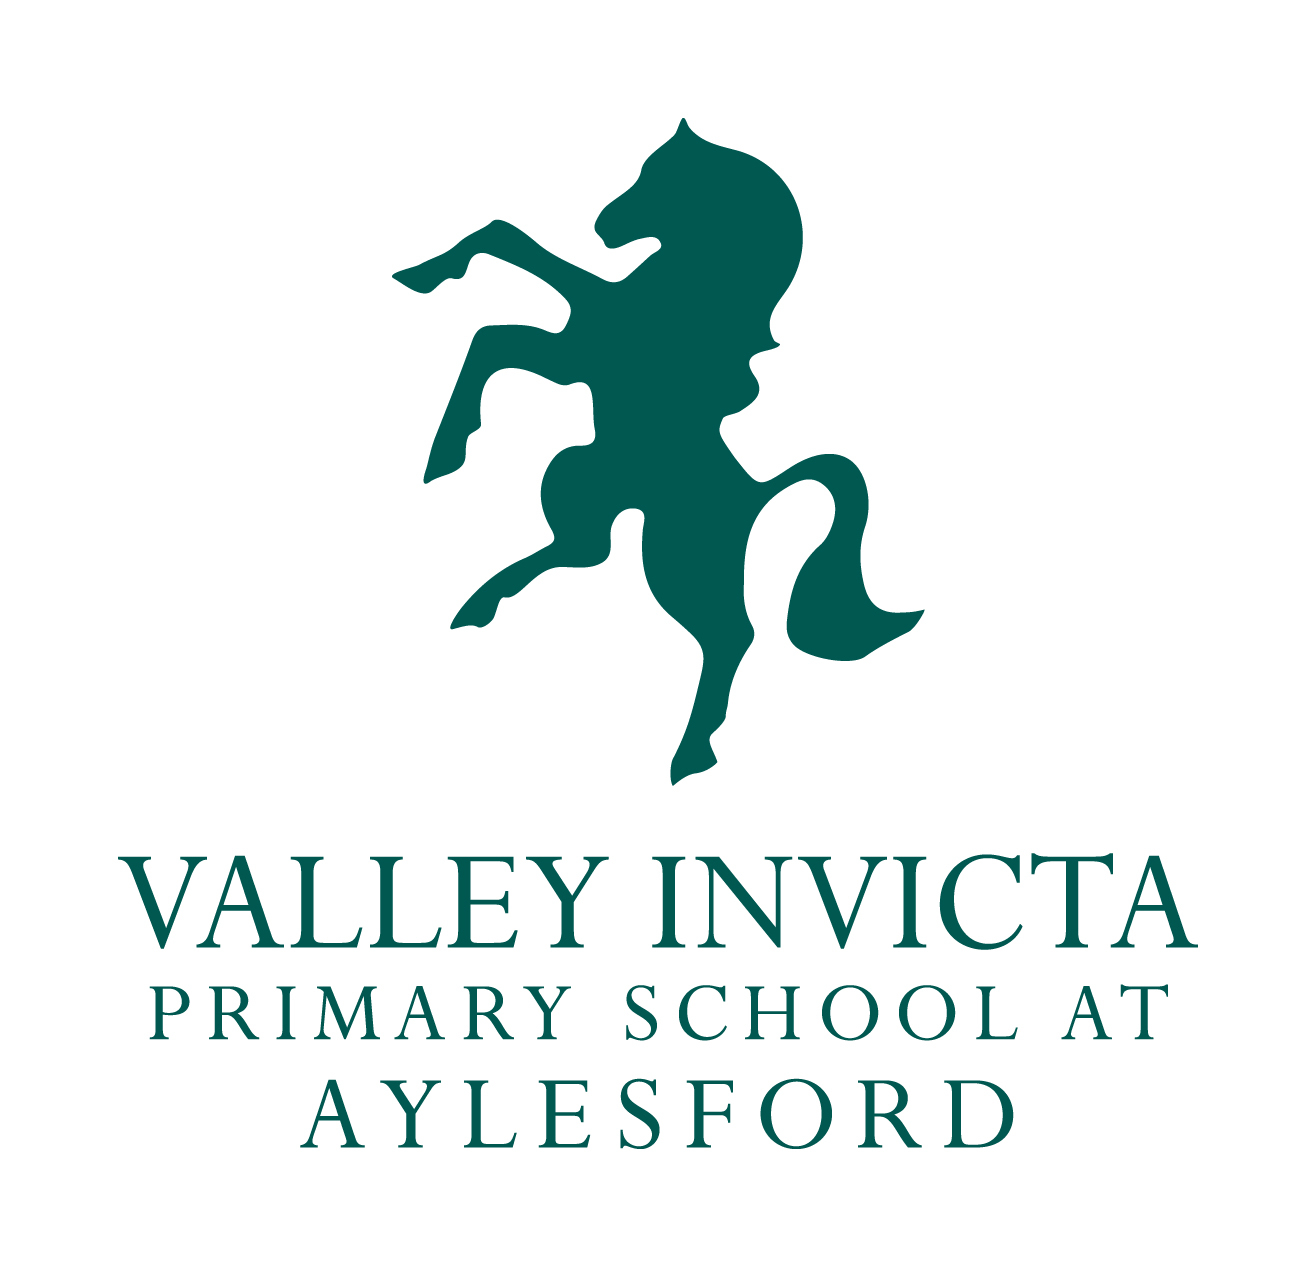 Valley Invicta Primary School at Aylesford